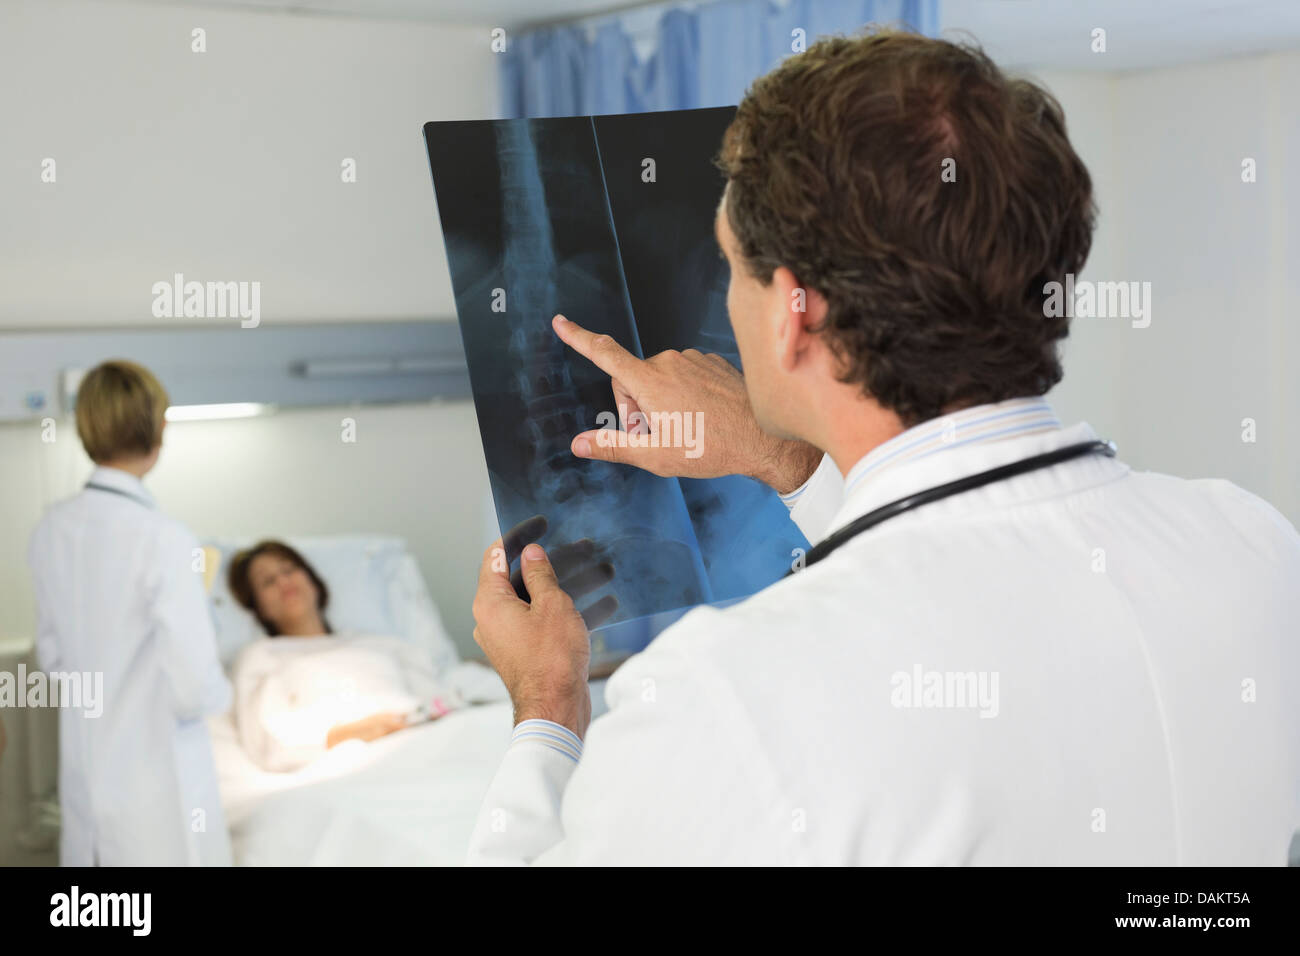 Doctor examining x-rays in hospital room Stock Photo